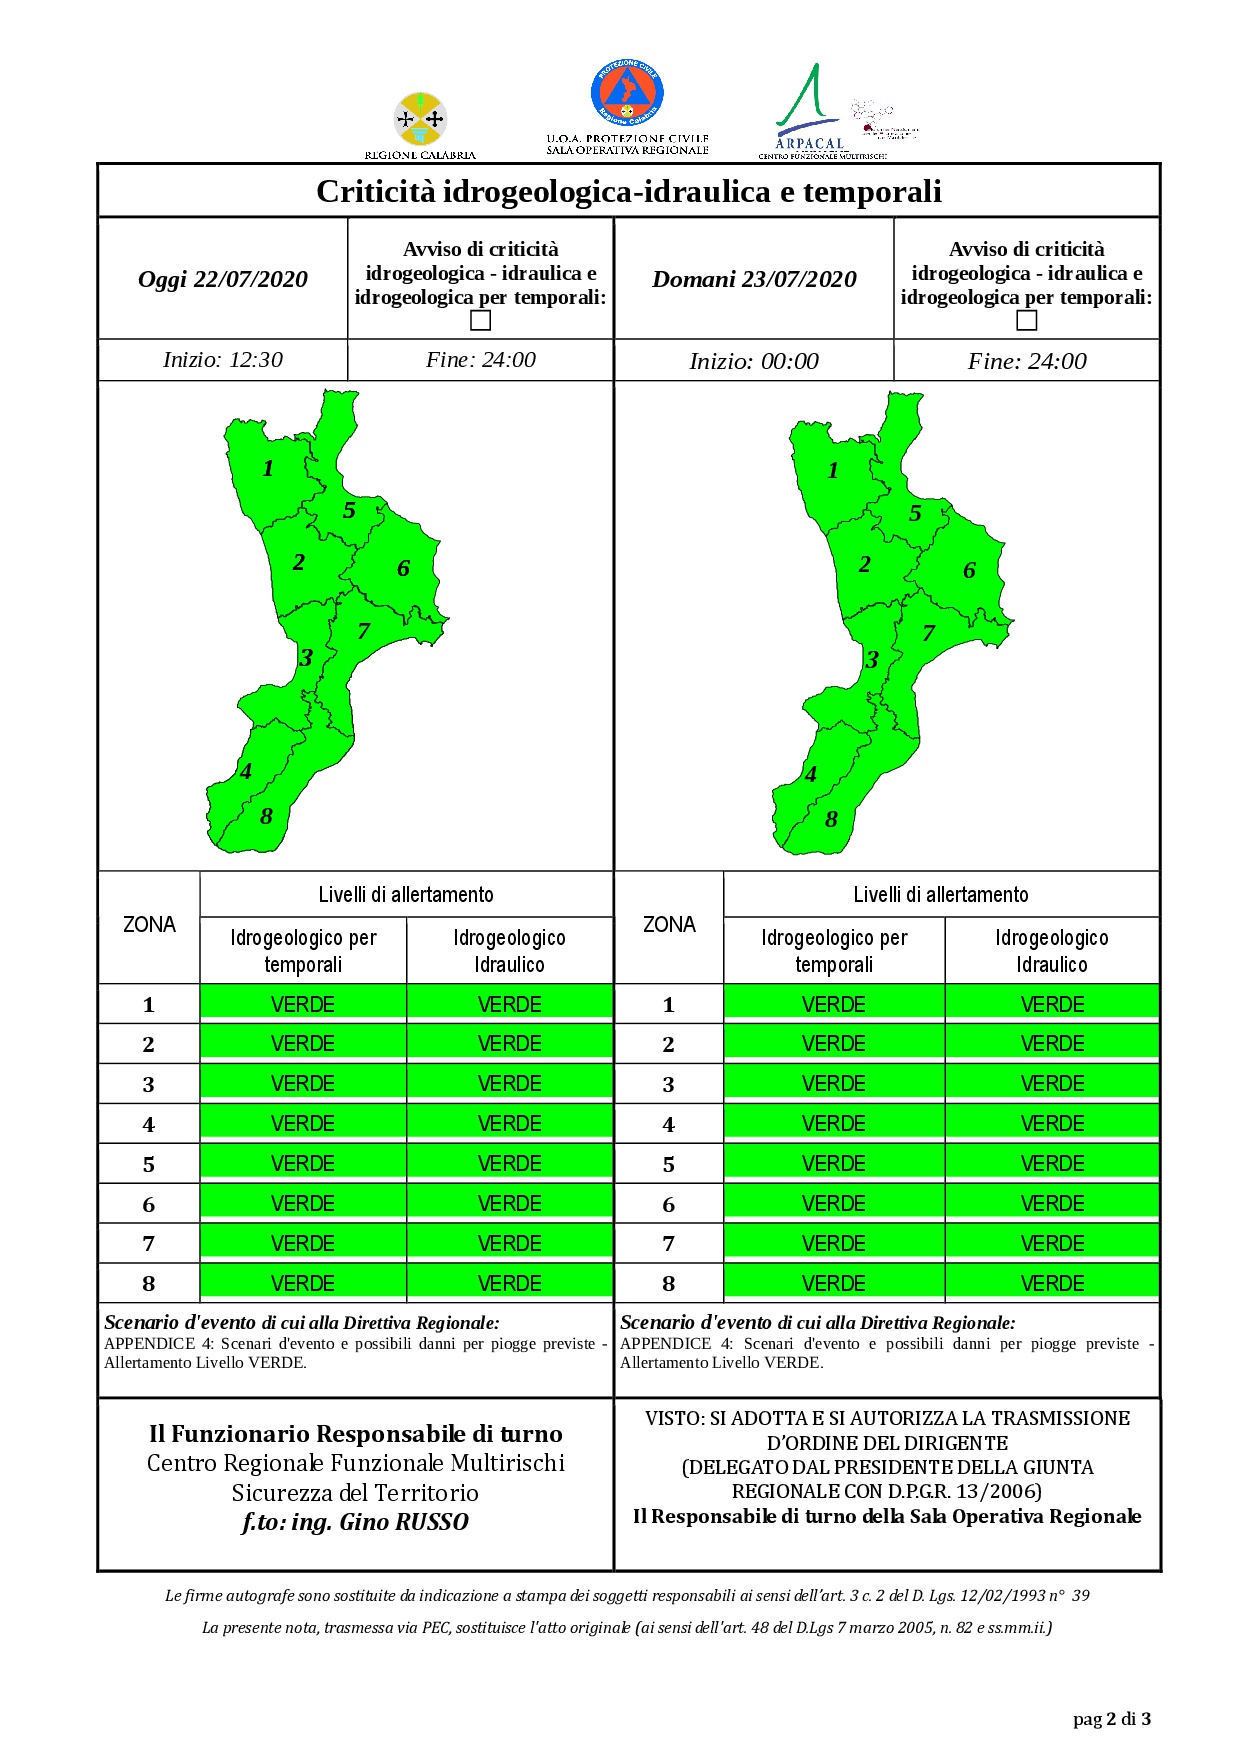 Criticità idrogeologica-idraulica e temporali in Calabria 22-07-2020